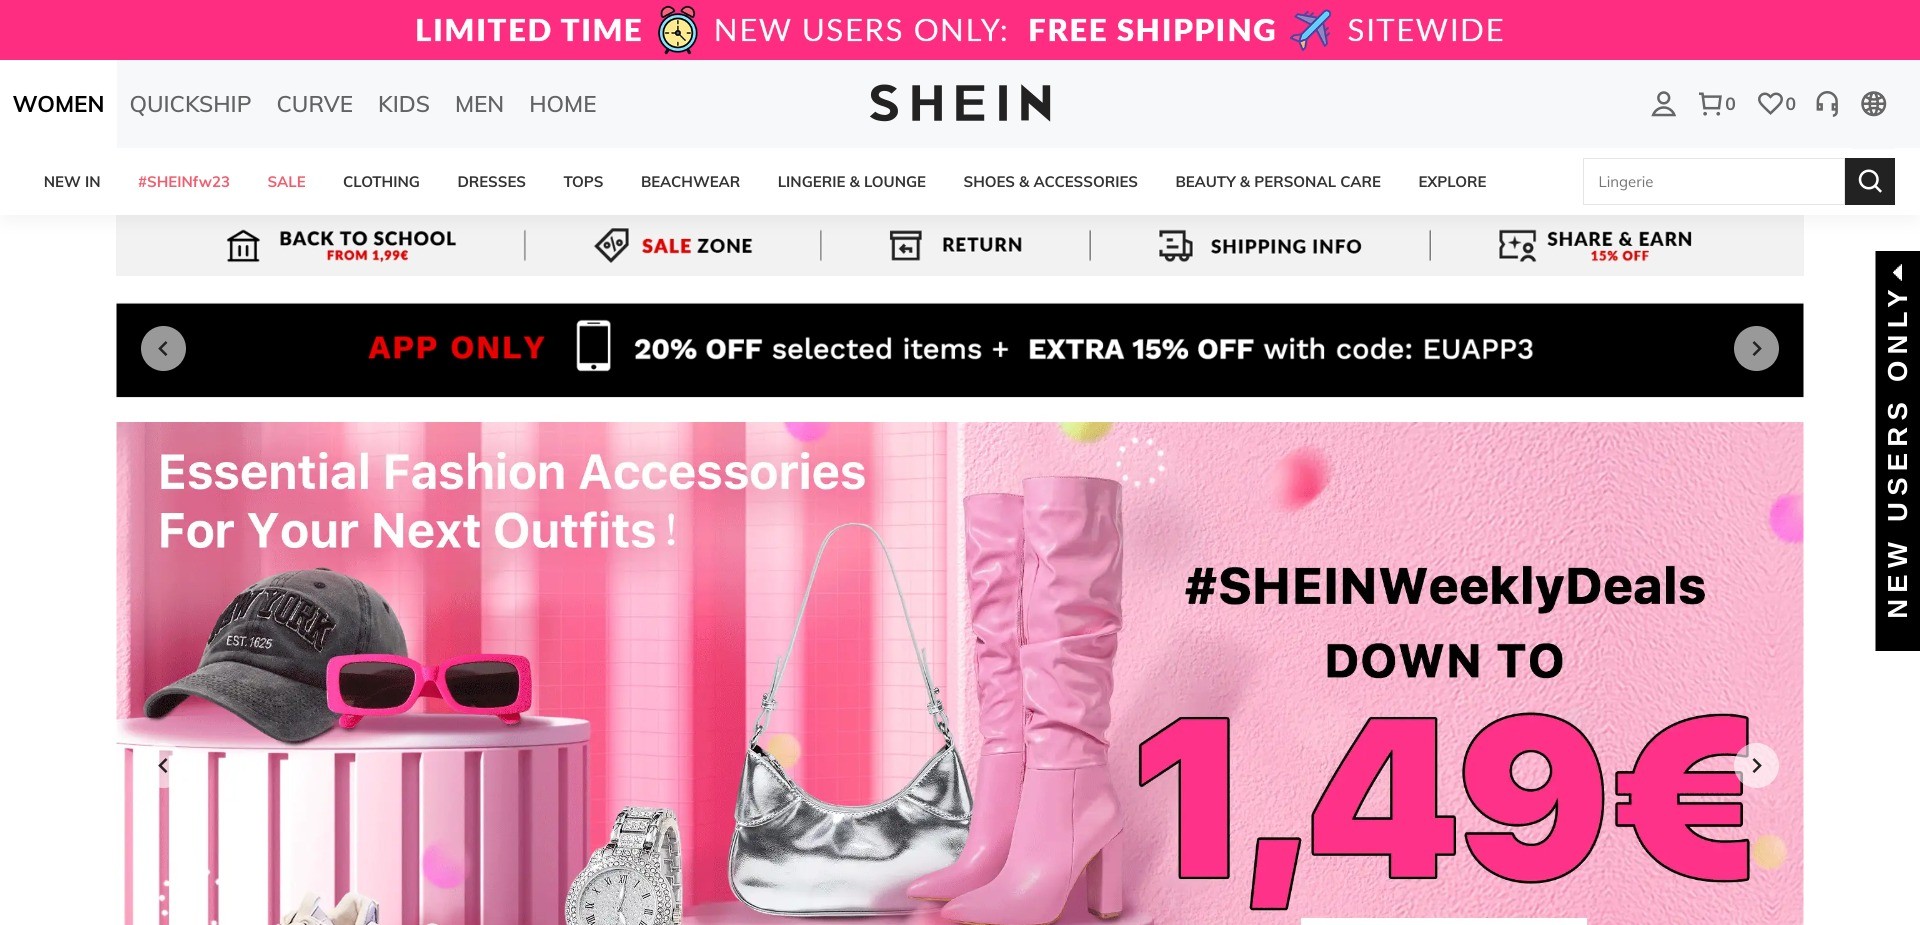 A screenshot of the homepage of shein.com